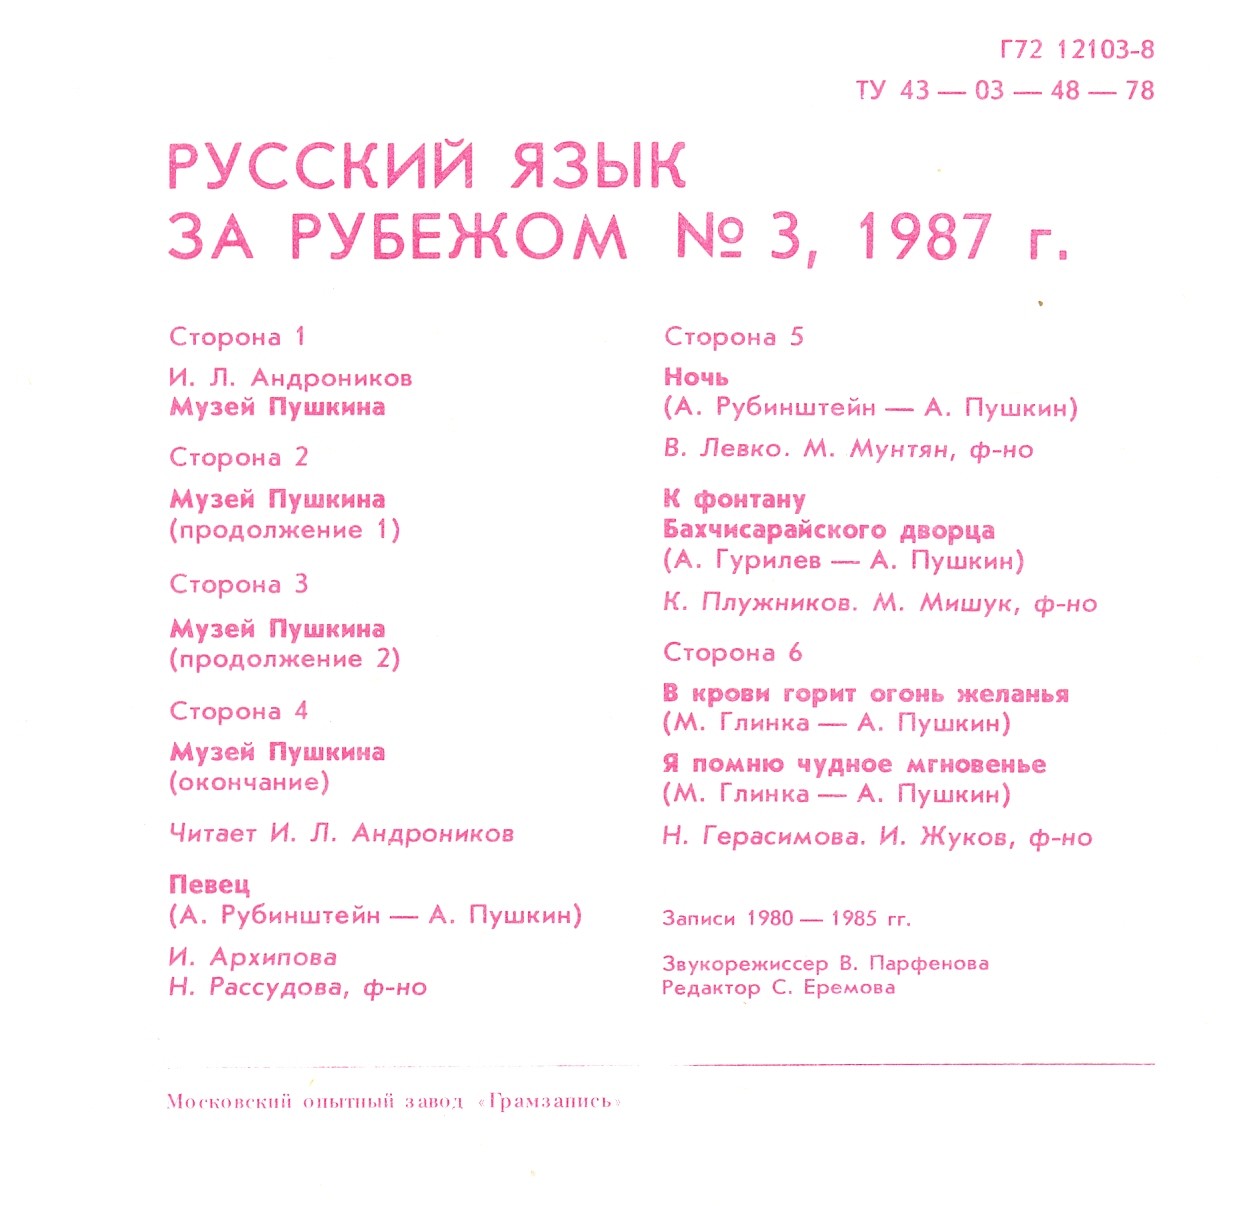 "РУССКИЙ ЯЗЫК ЗА РУБЕЖОМ", № 3 - 1987